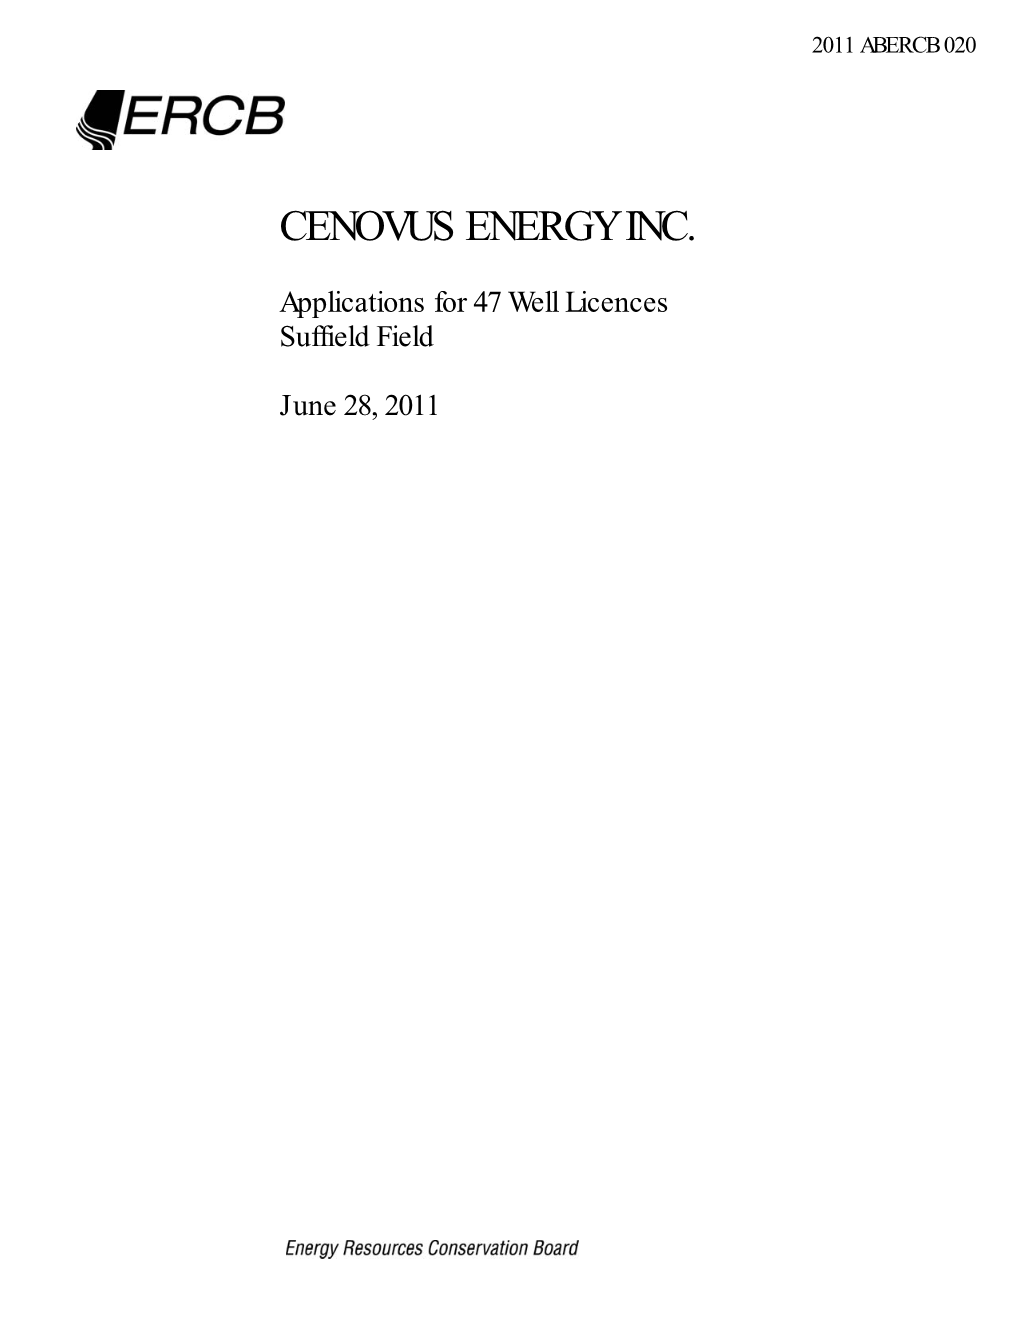 Decision 2011-020: Cenovus Energy Inc